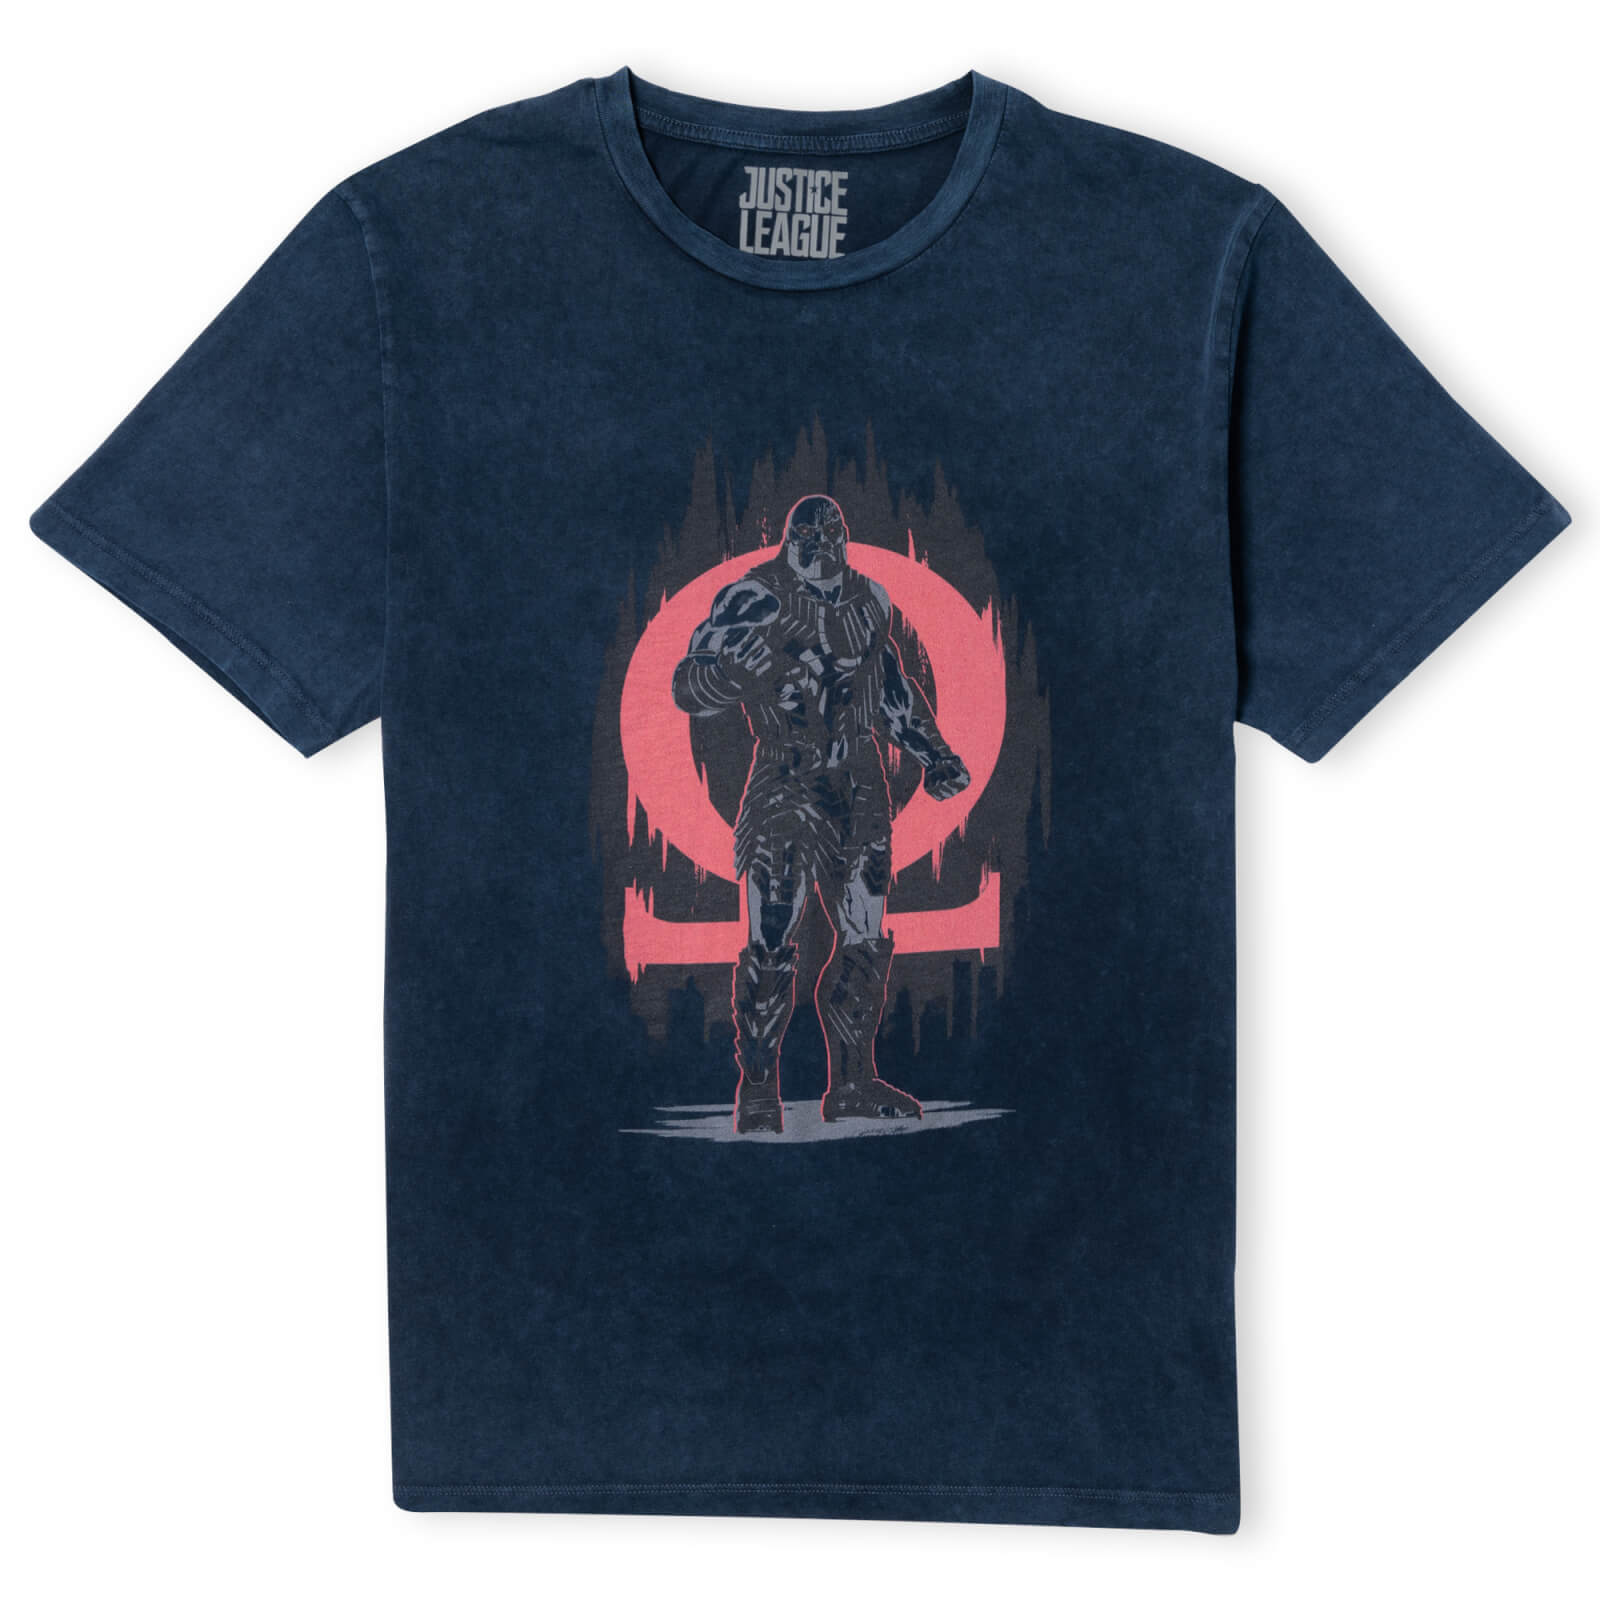 Justice League Darkseid Unisex T-Shirt - Navy Acid Wash - S - Navy Acid Wash